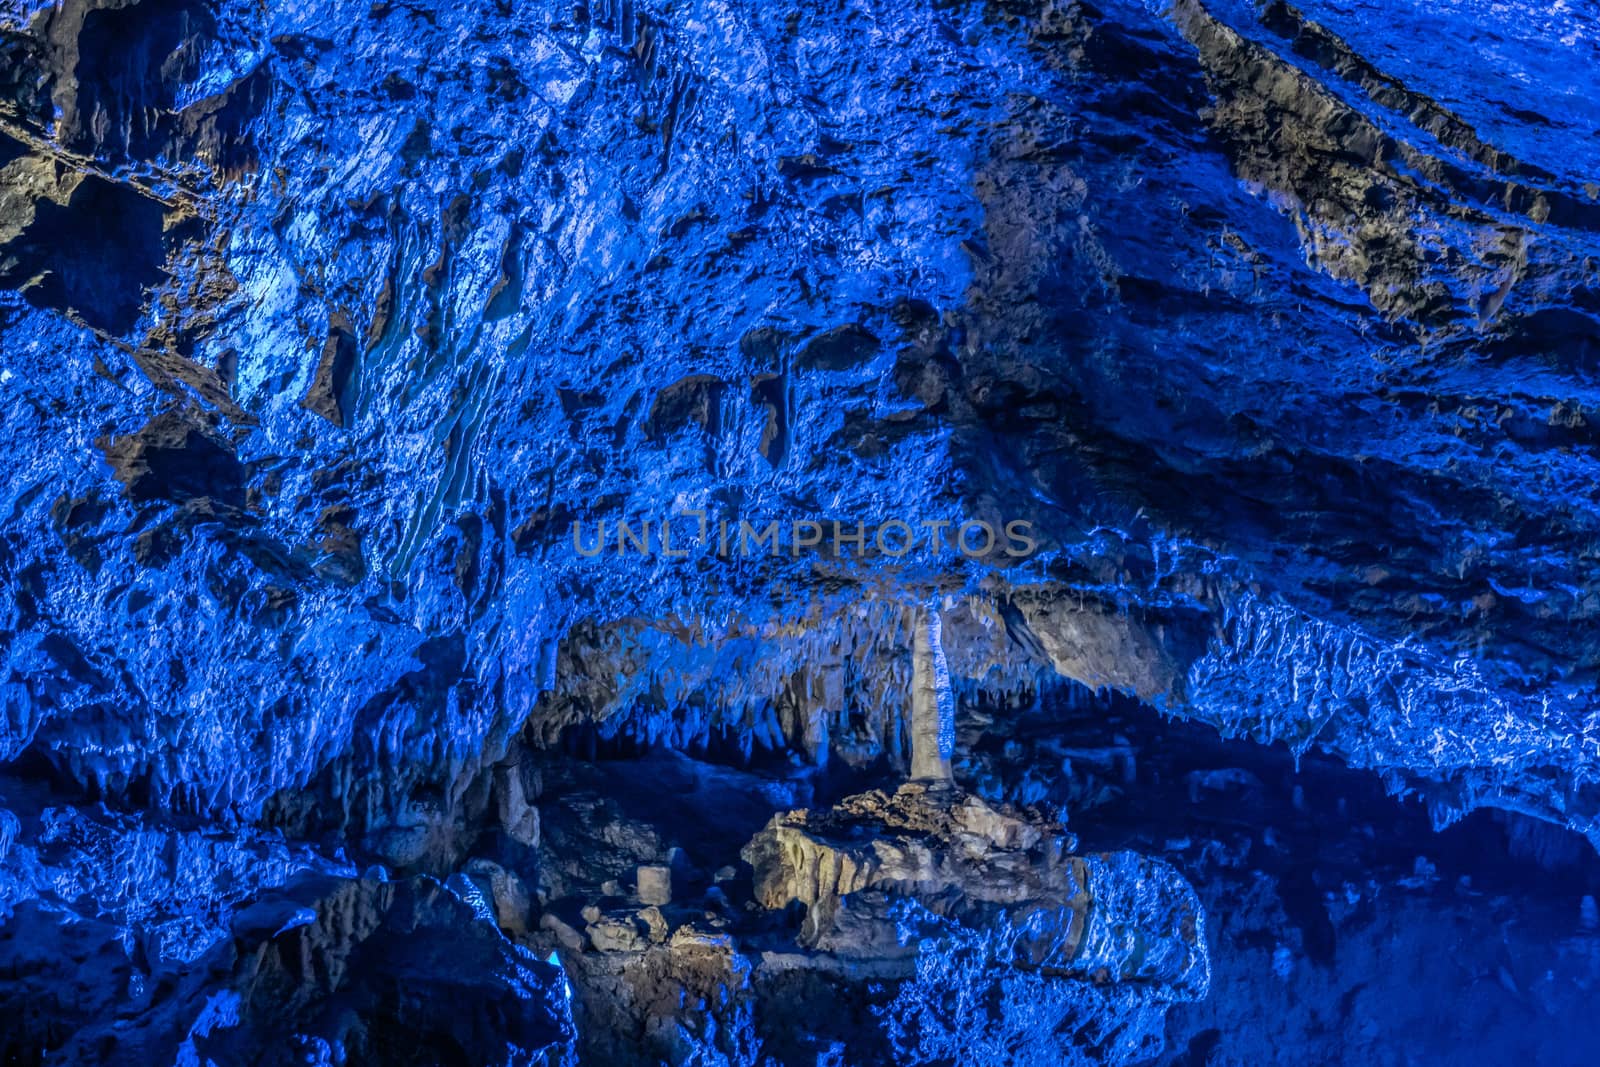 Lightshow on stalactites in Grottes-de-Han, Han-sur-lesse, Belgi by Claudine